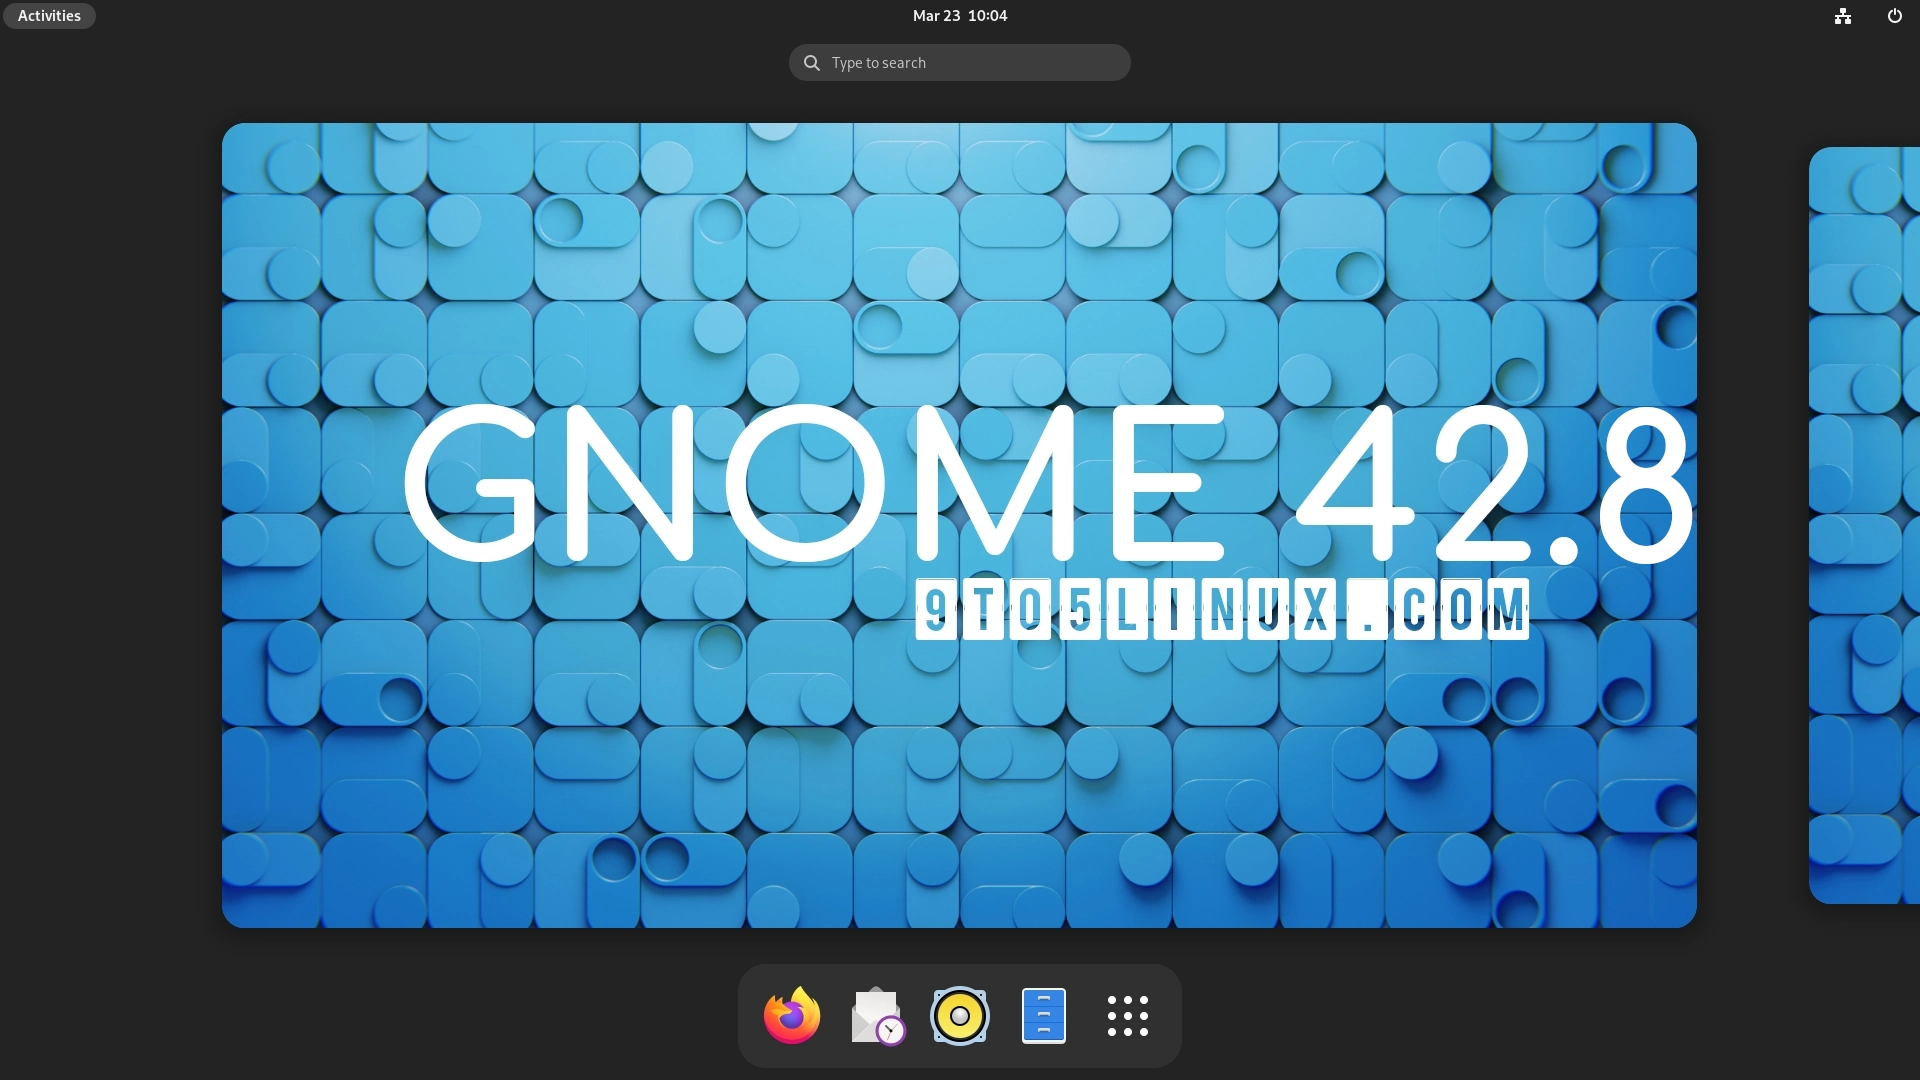 GNOME 42.8 Enables Atomic Mode-Setting for NVIDIA/GBM, Improves Wayland and AMDGPU Support